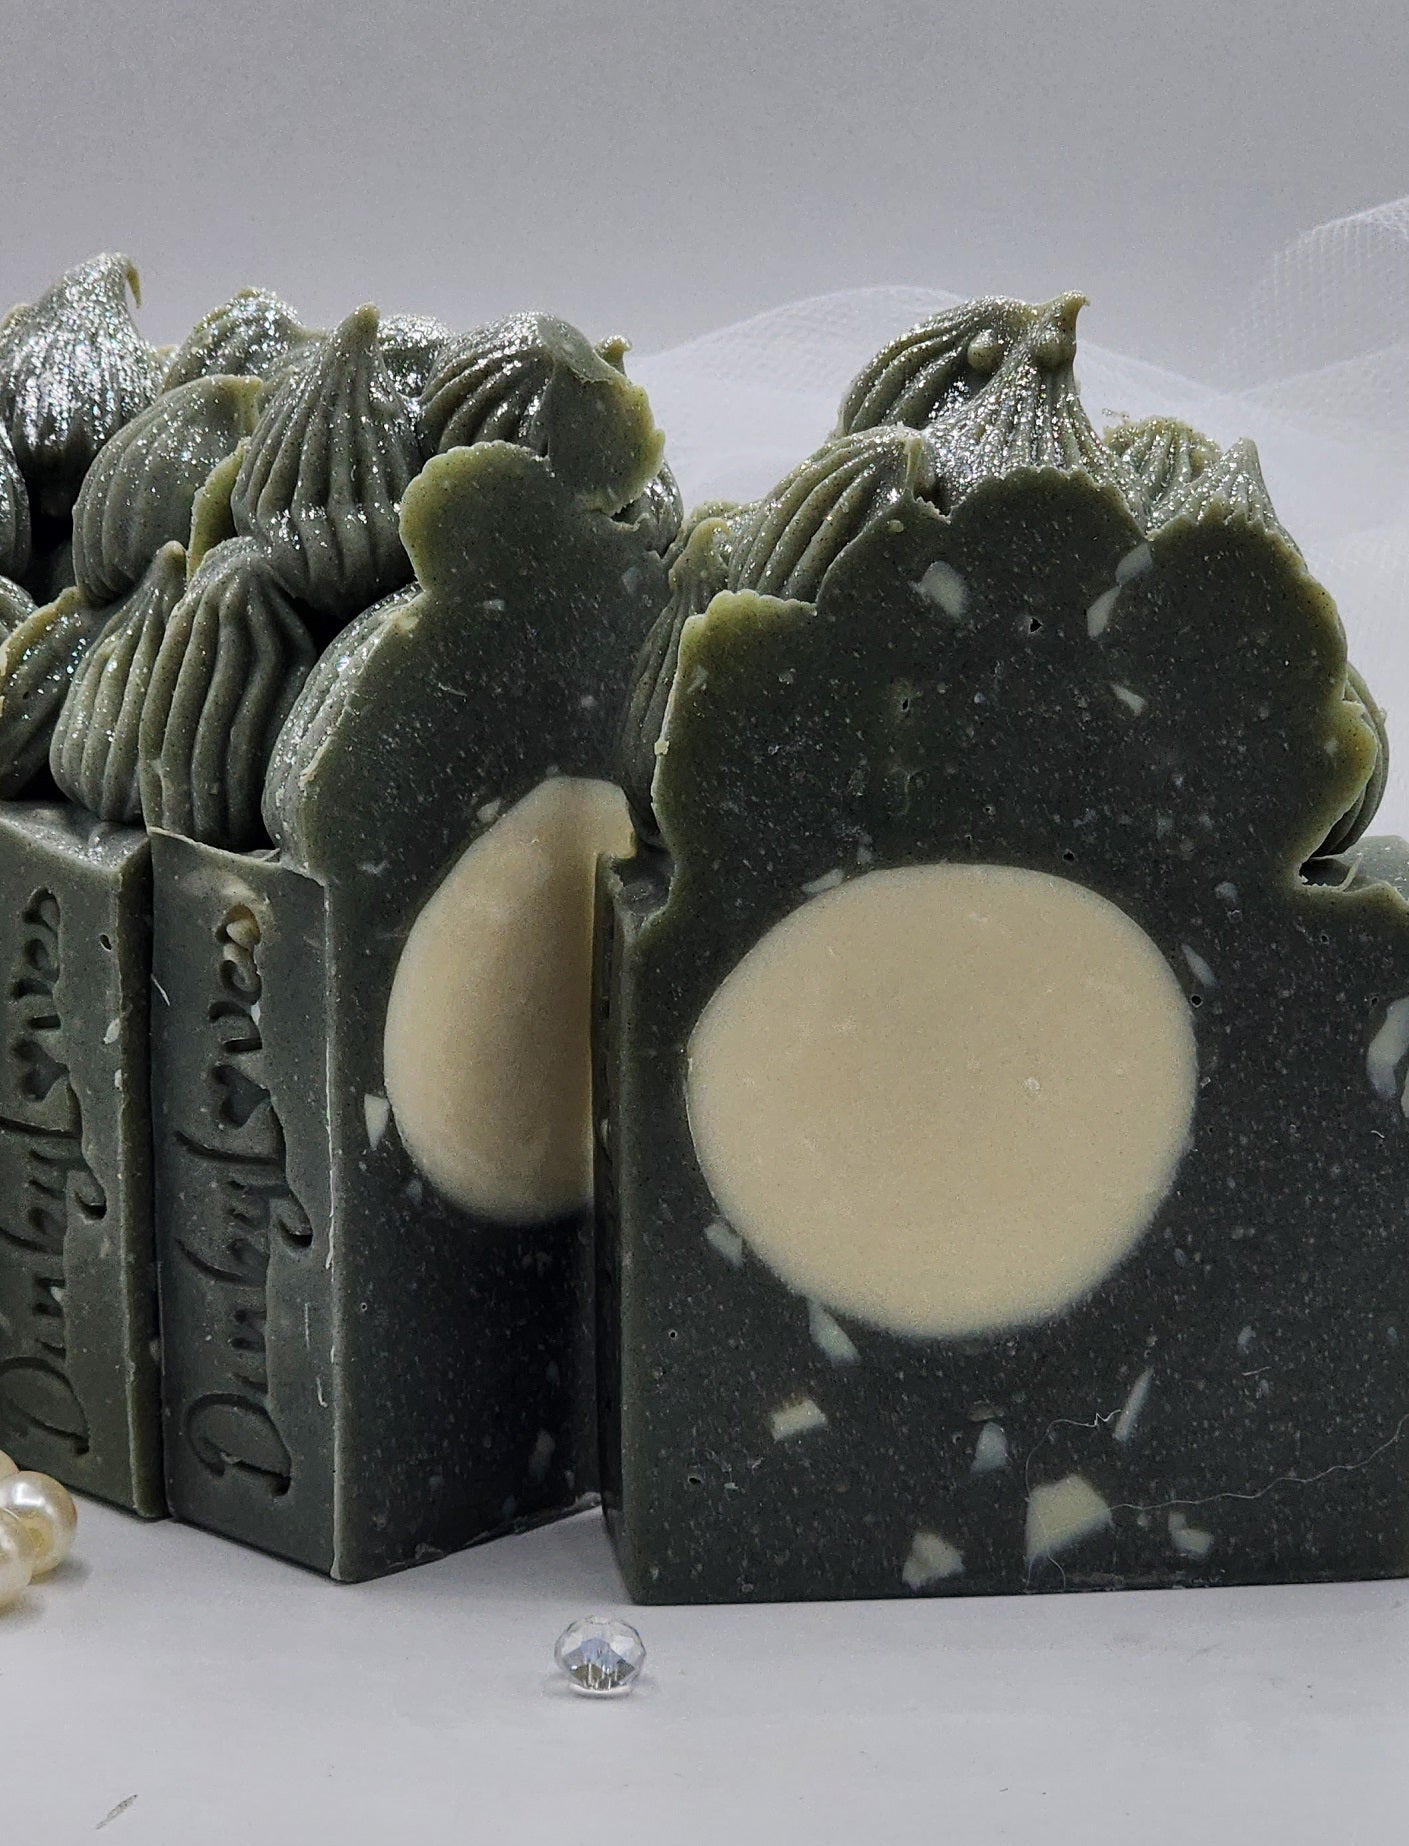 FULL MOON  / FALL SOAPS / AUTUMN SOAP / Bar Soap / Gift Soap / Gift Idea / Handmade Soap / Cold Process Soap